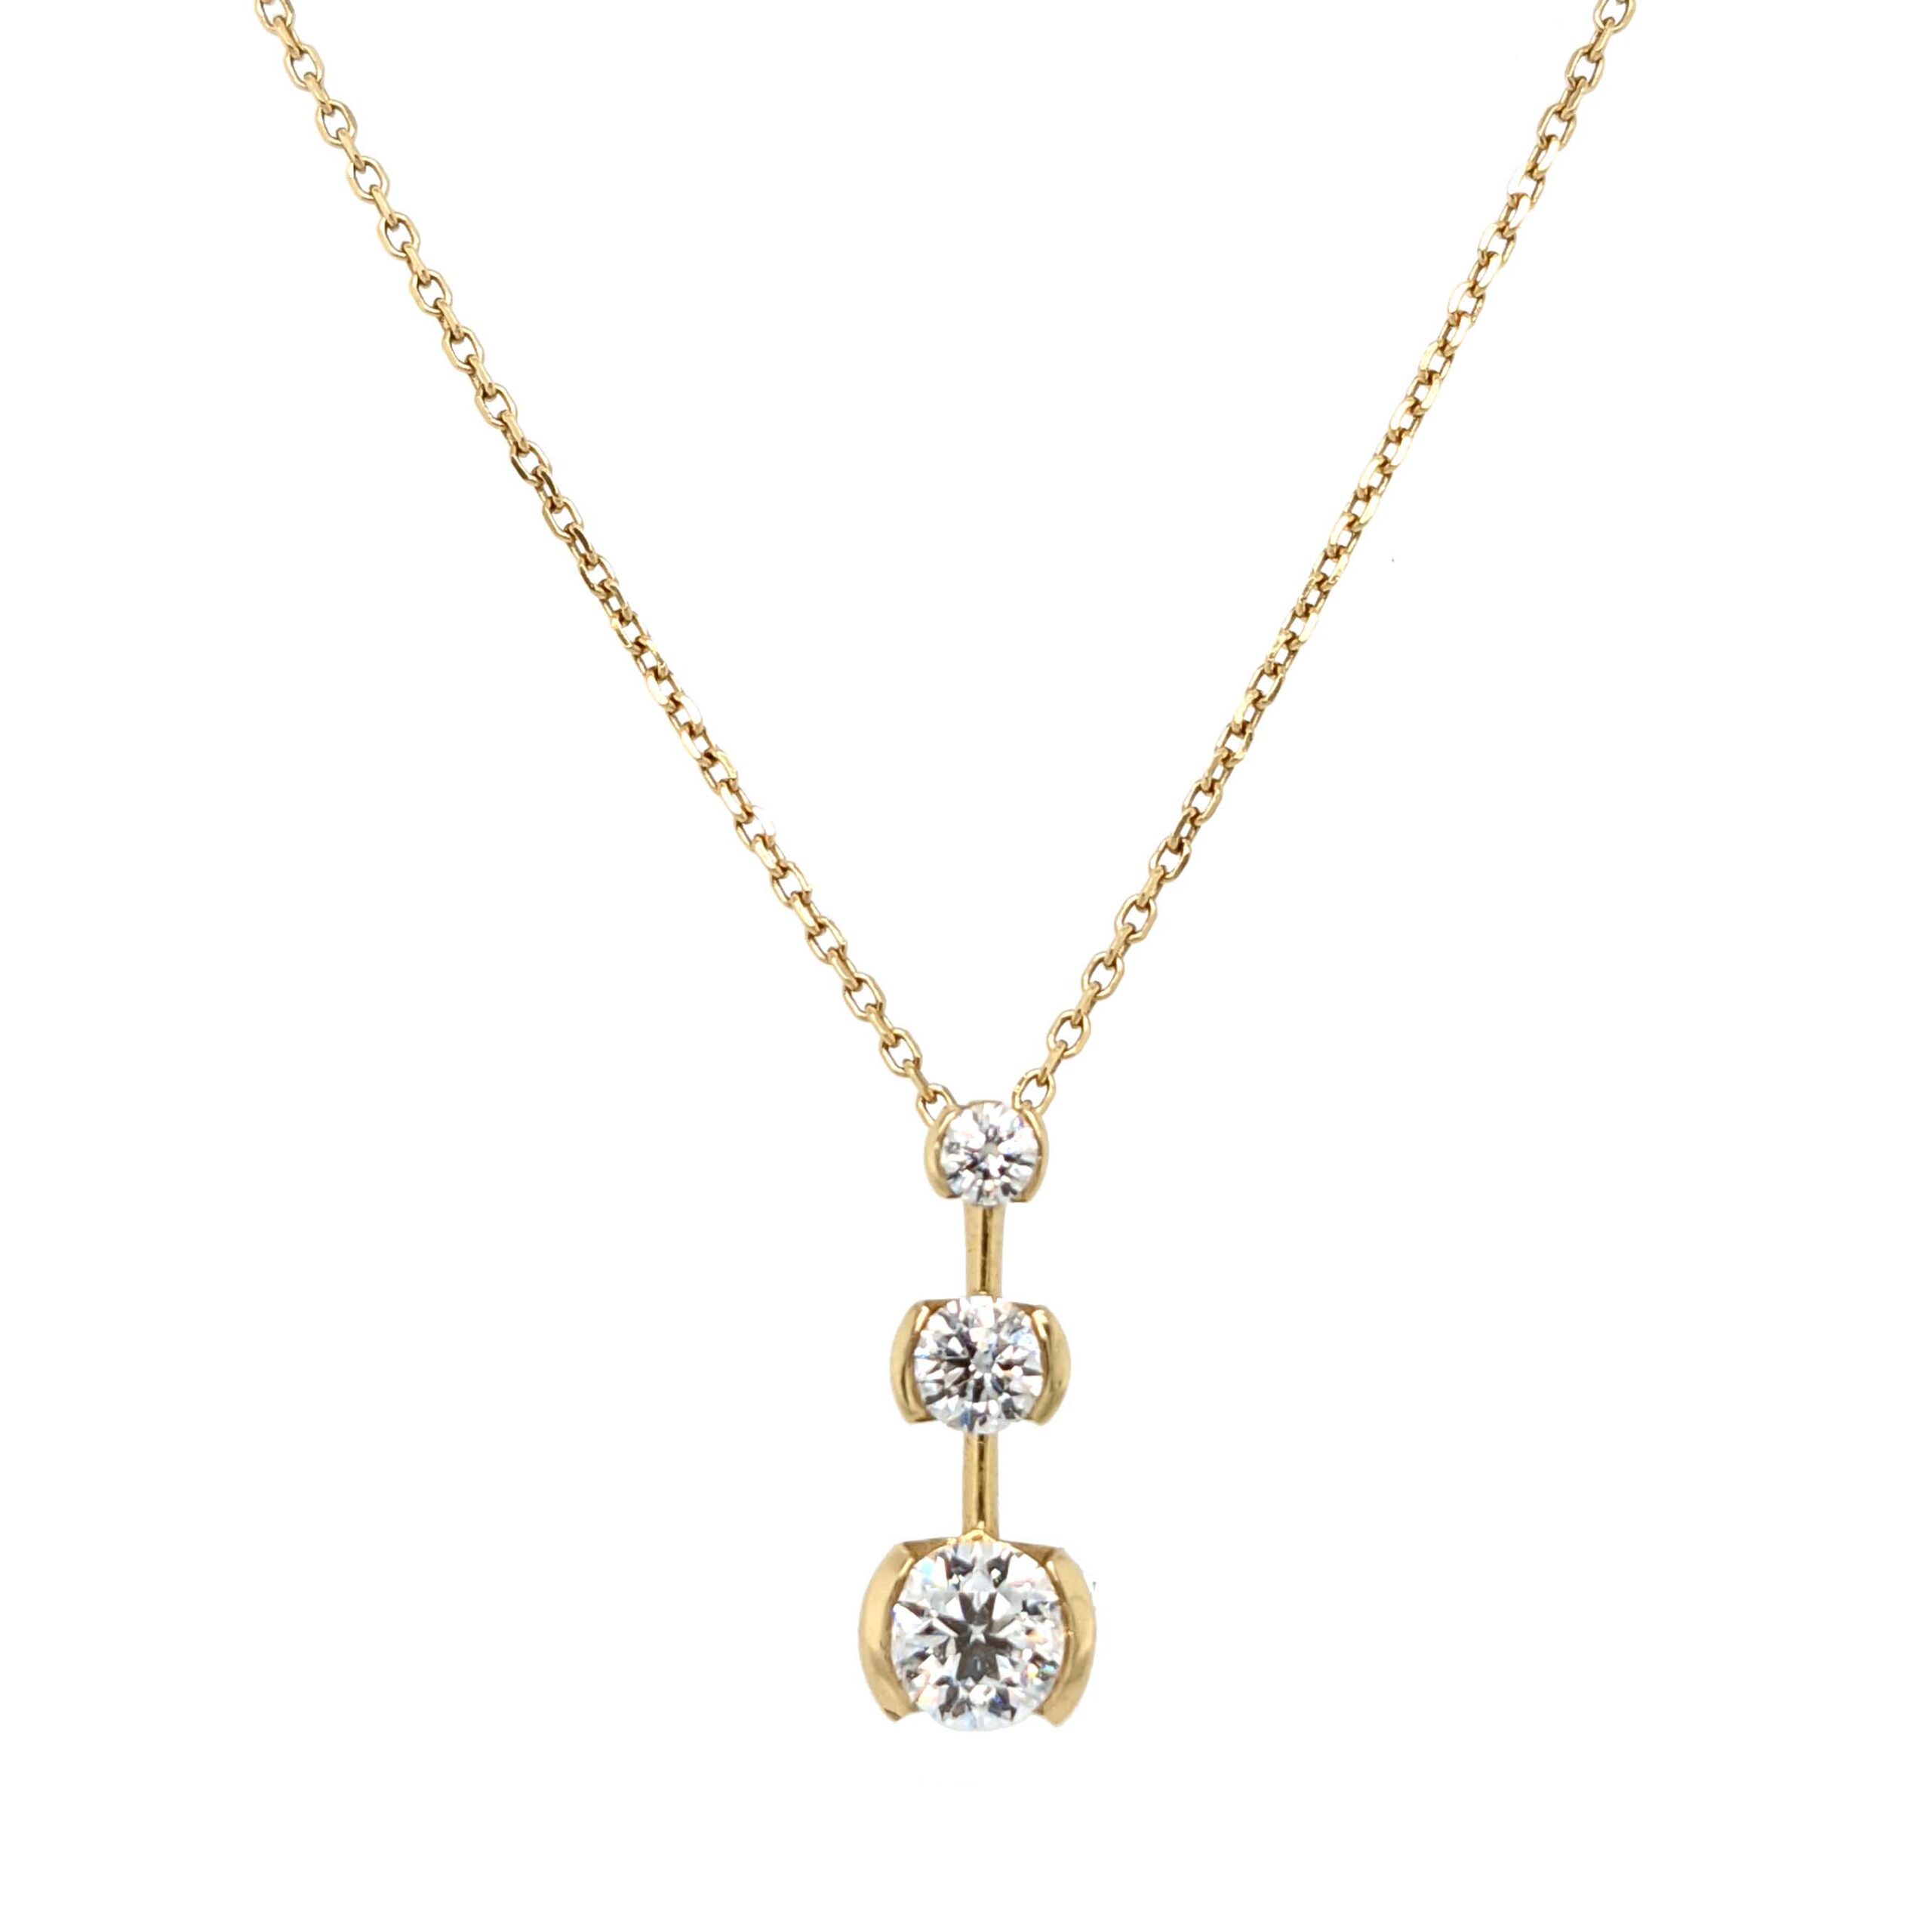 18ct yellow gold 3 stone diamond pendant on chain on Sally Thorntons jewellery blog from AA Thornton Kettering Northampton 